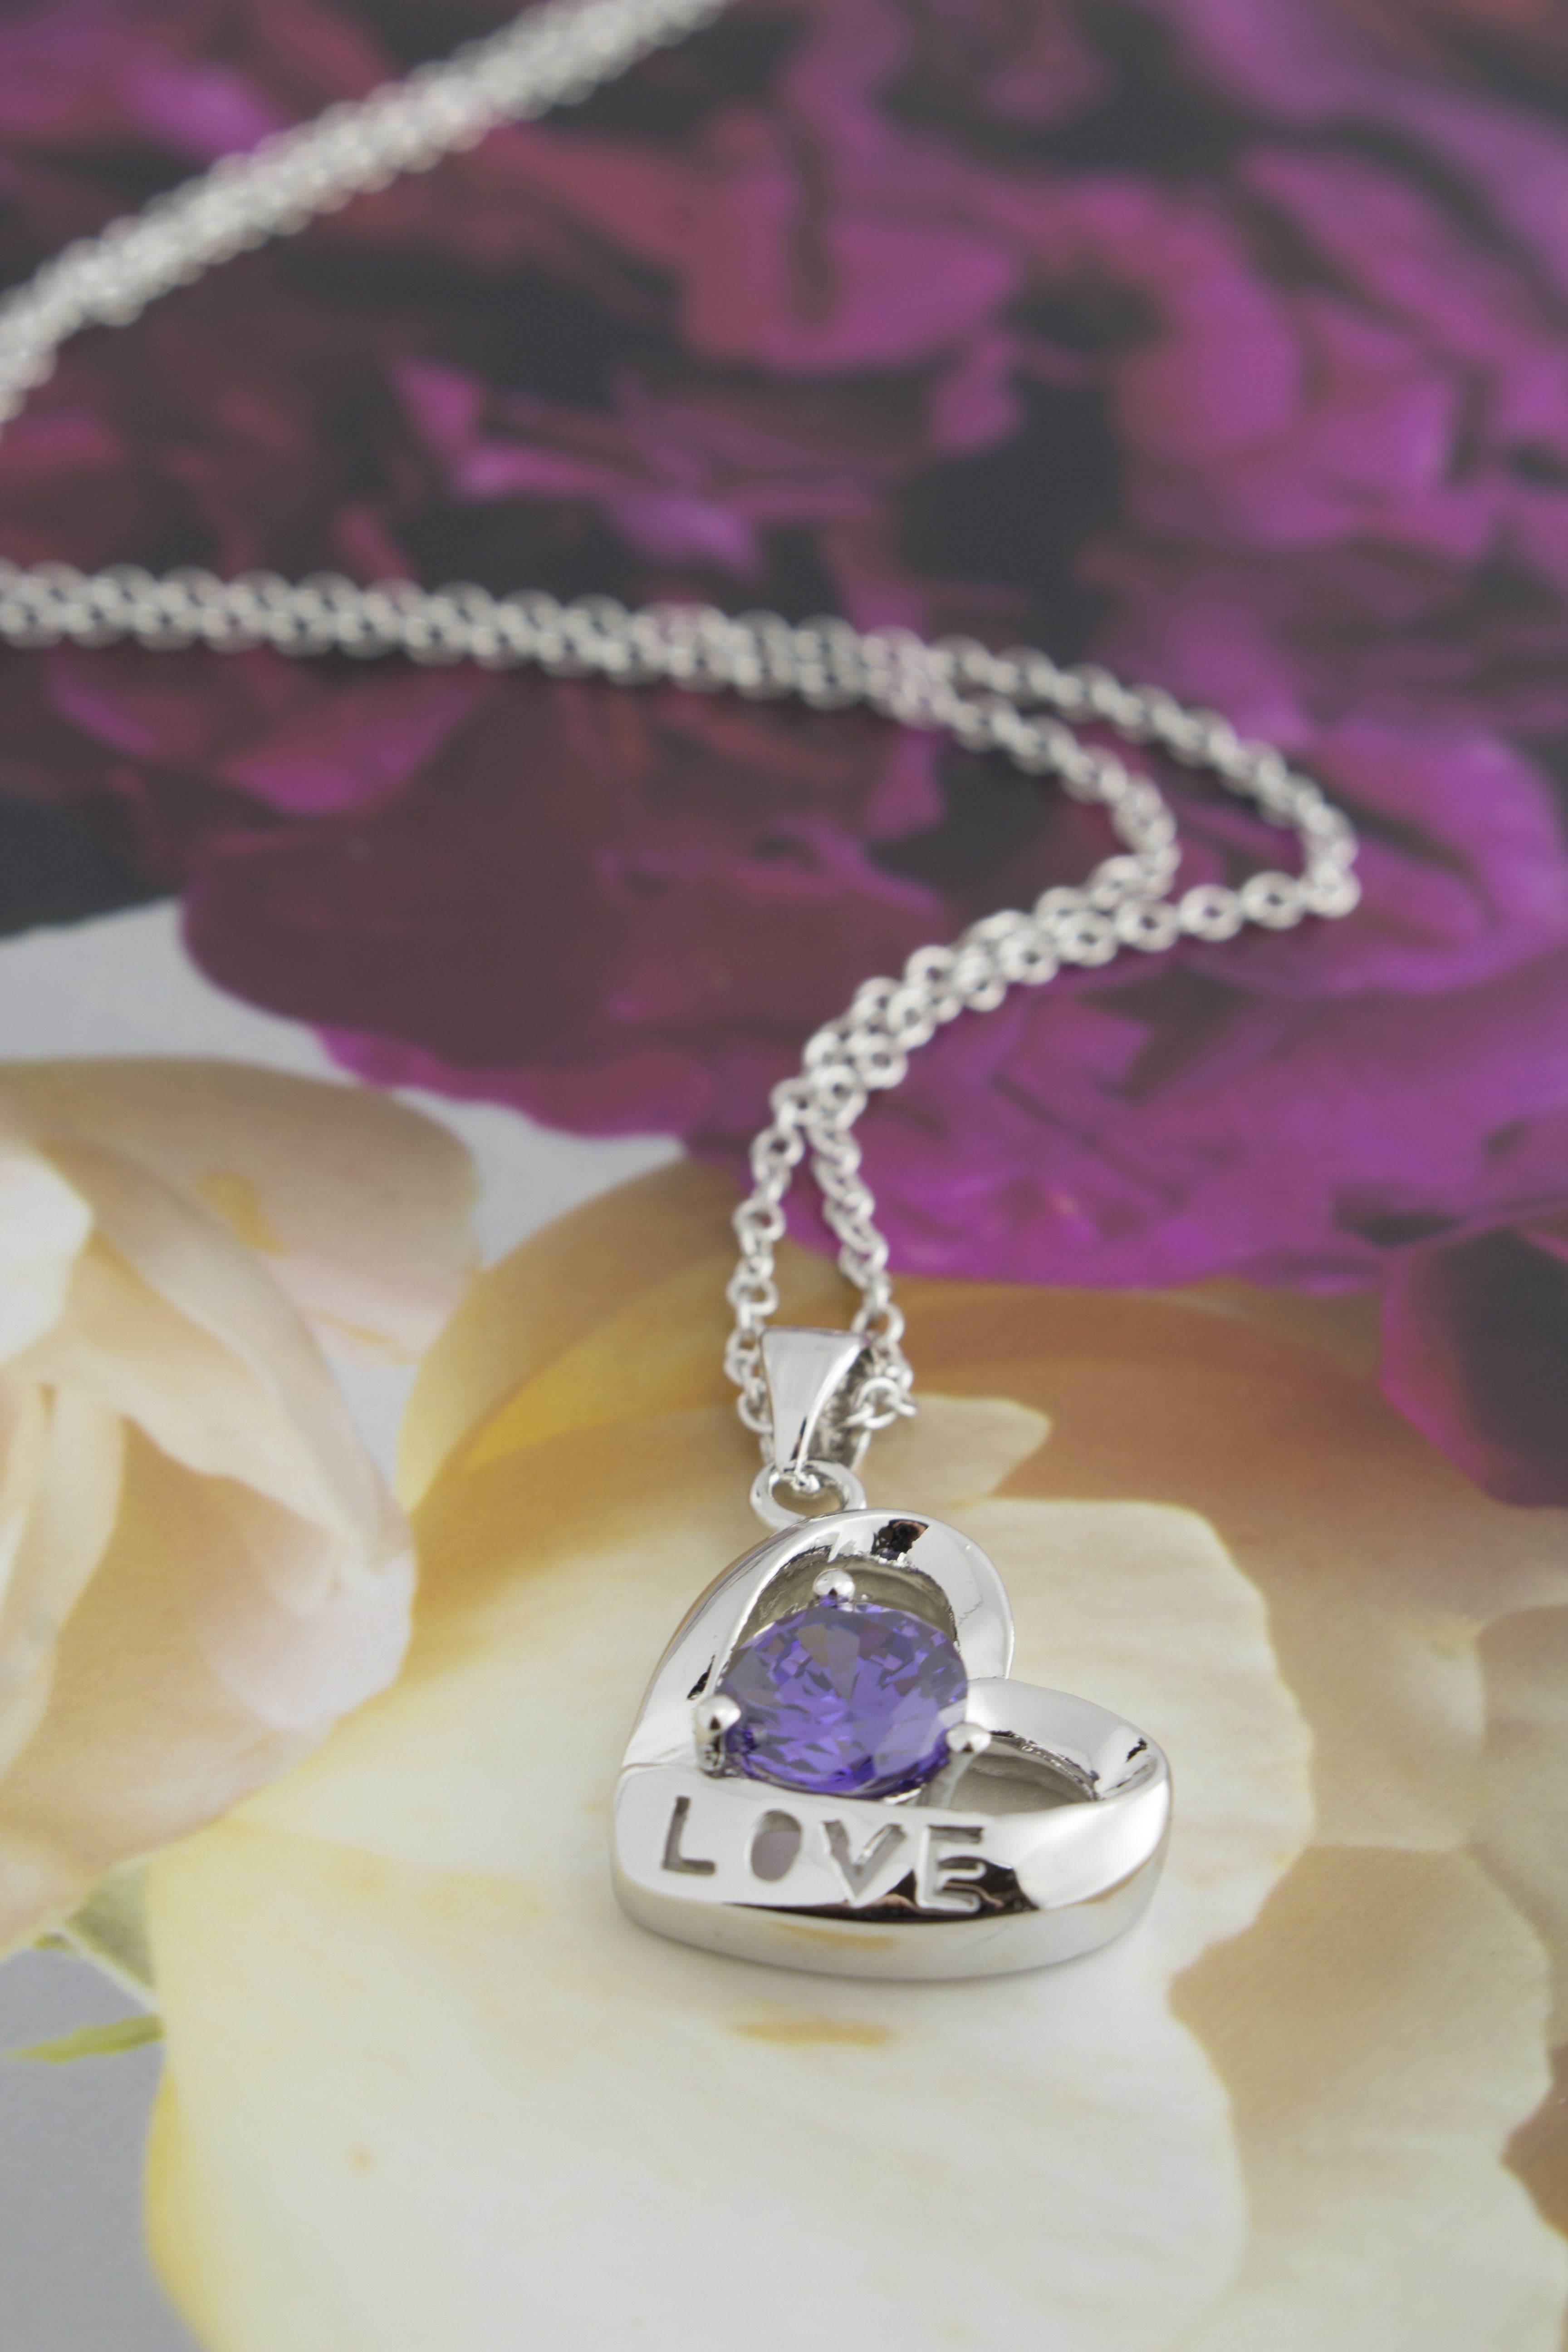 Love Necklaces, Open Hearts Necklace with Love inscription, Silvertone Heart Pendant I Love You, Purple - Pop Fashion